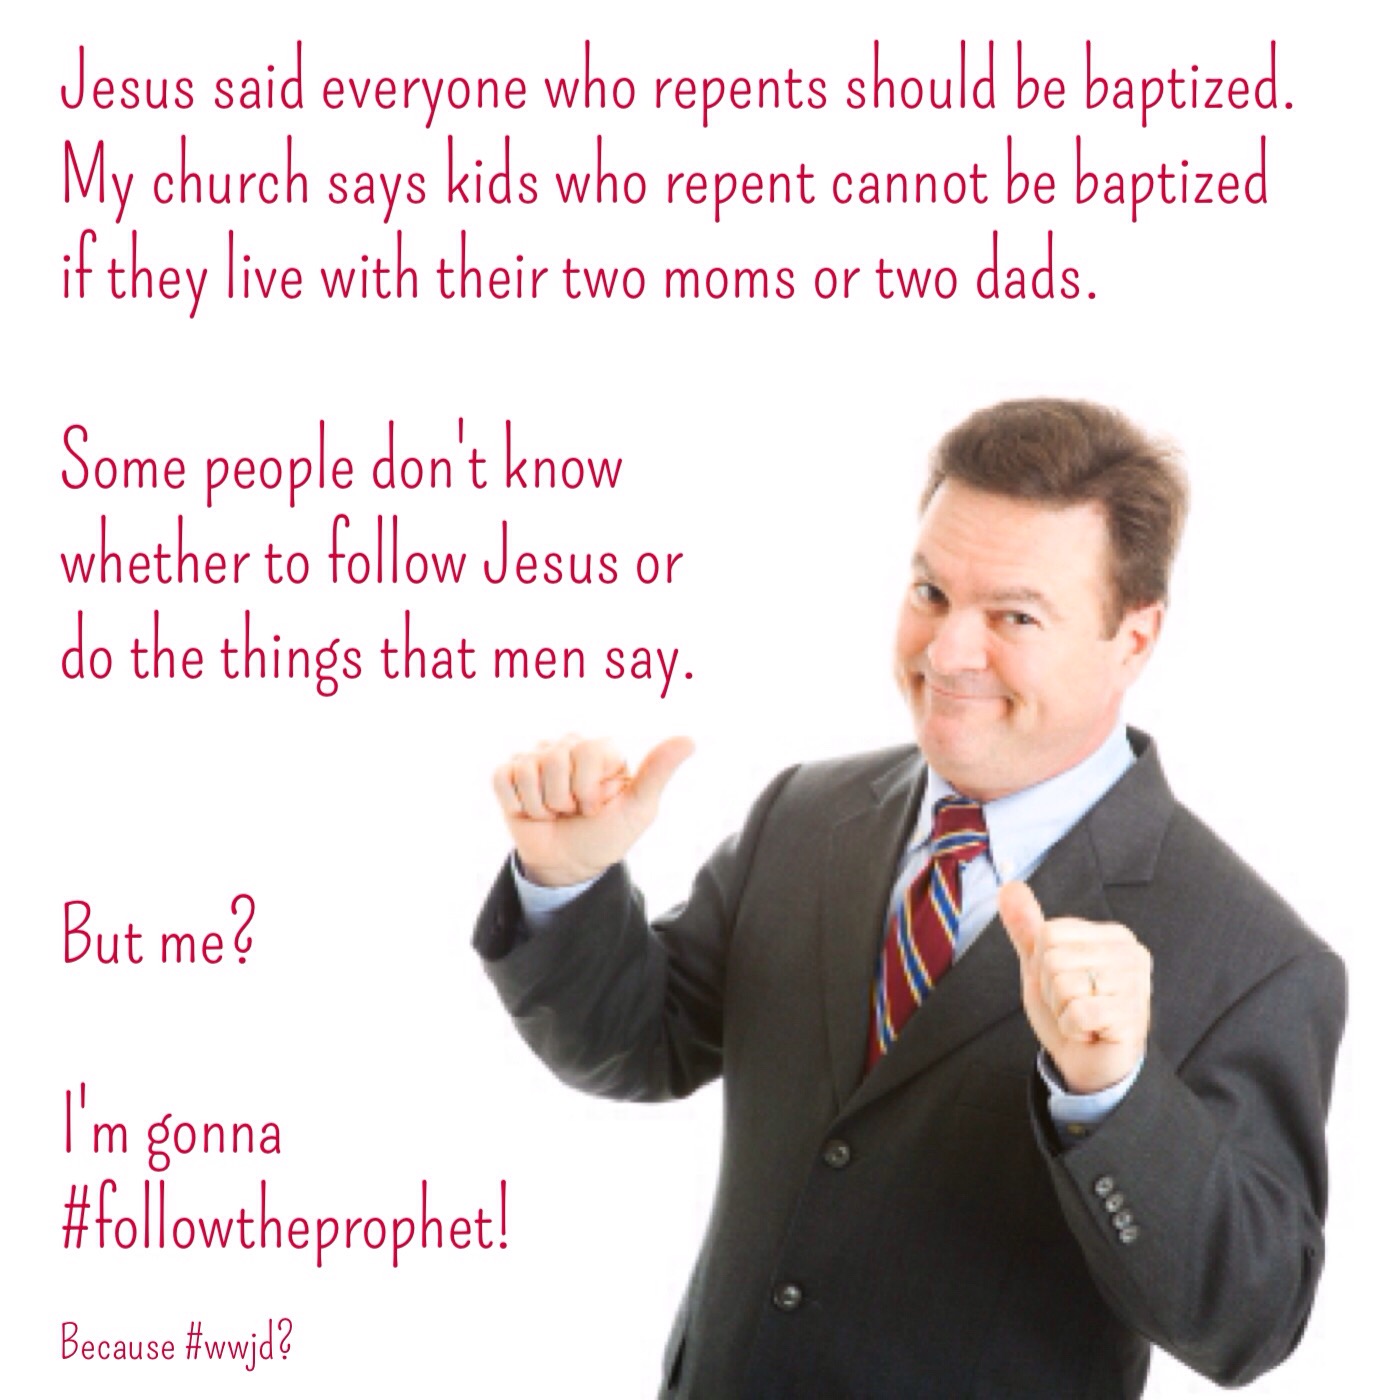 Follow Jesus or the prophet?